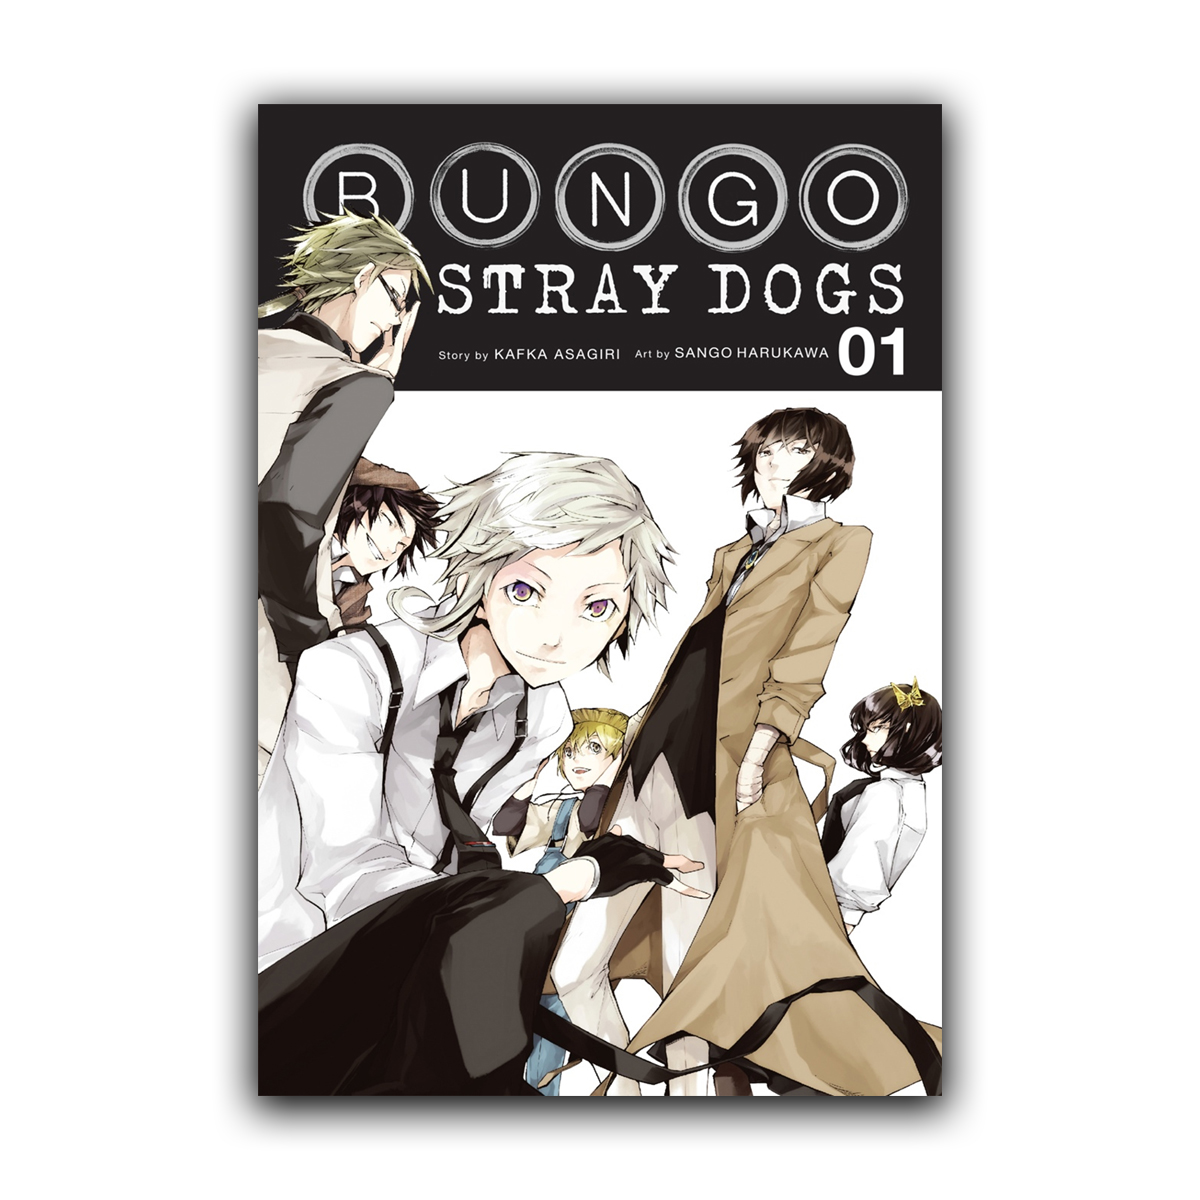 کتاب Bungo Stray Dogs 1 اثر Sango Harukawa and Kafka Asagiri نشر Yen Press